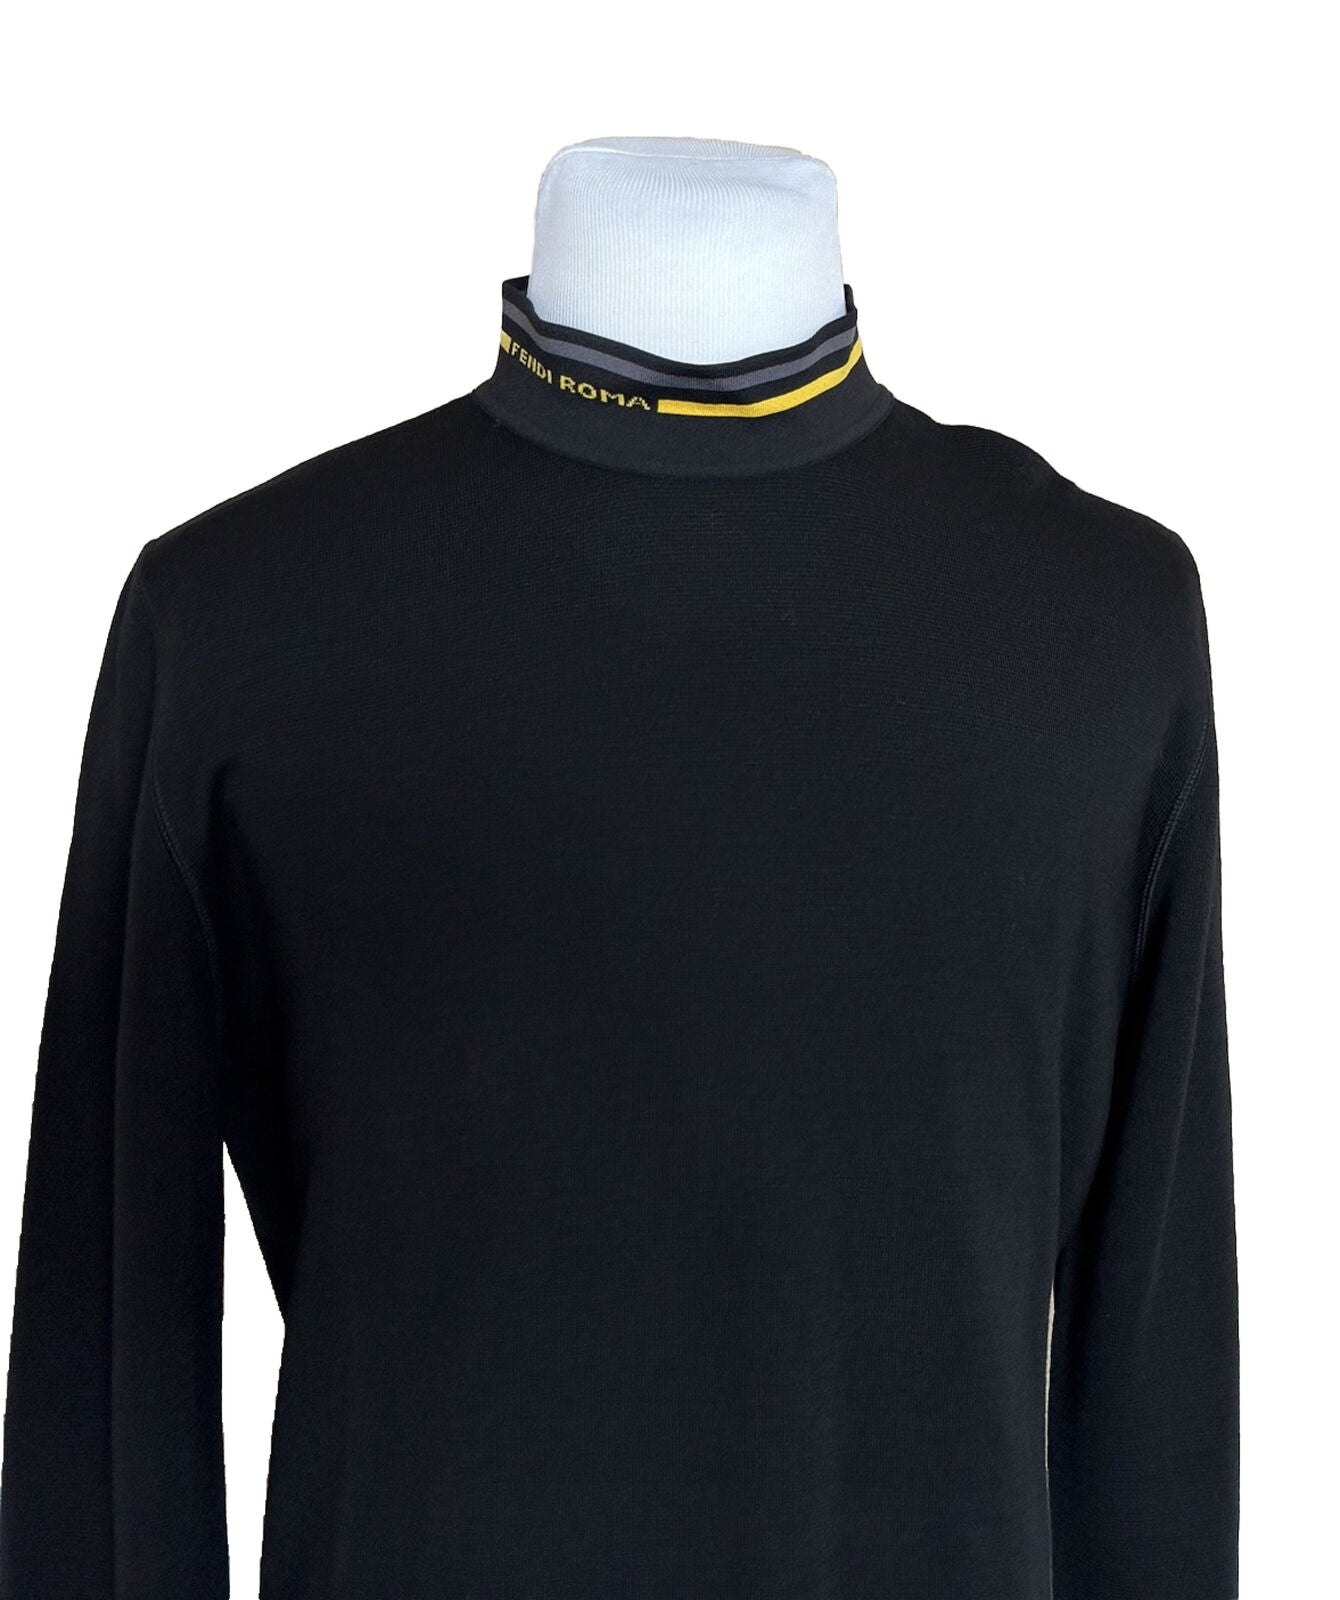 NWT $850 Fendi Wool Knit Sweater Black 54 Euro FZY464 Made in Italy